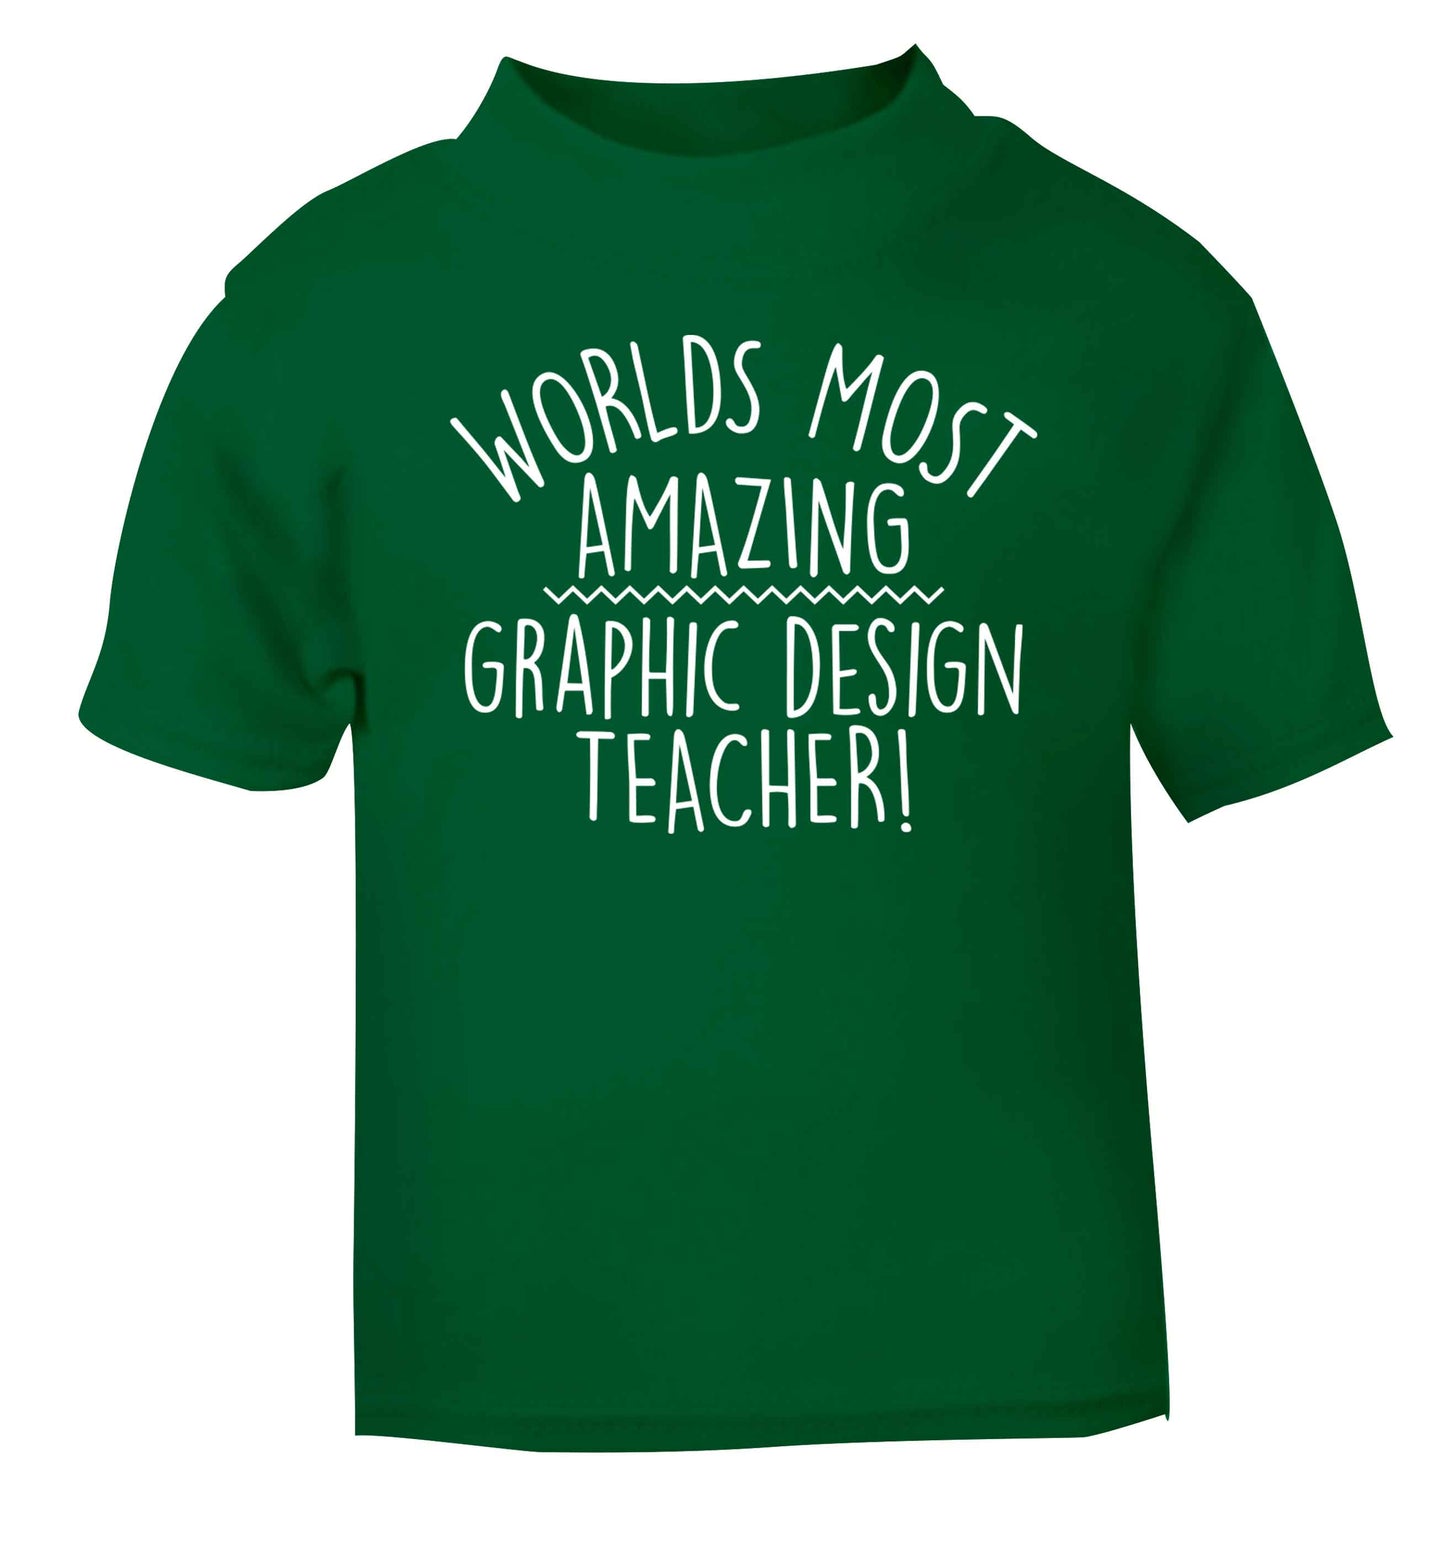 Worlds most amazing graphic design teacher green baby toddler Tshirt 2 Years